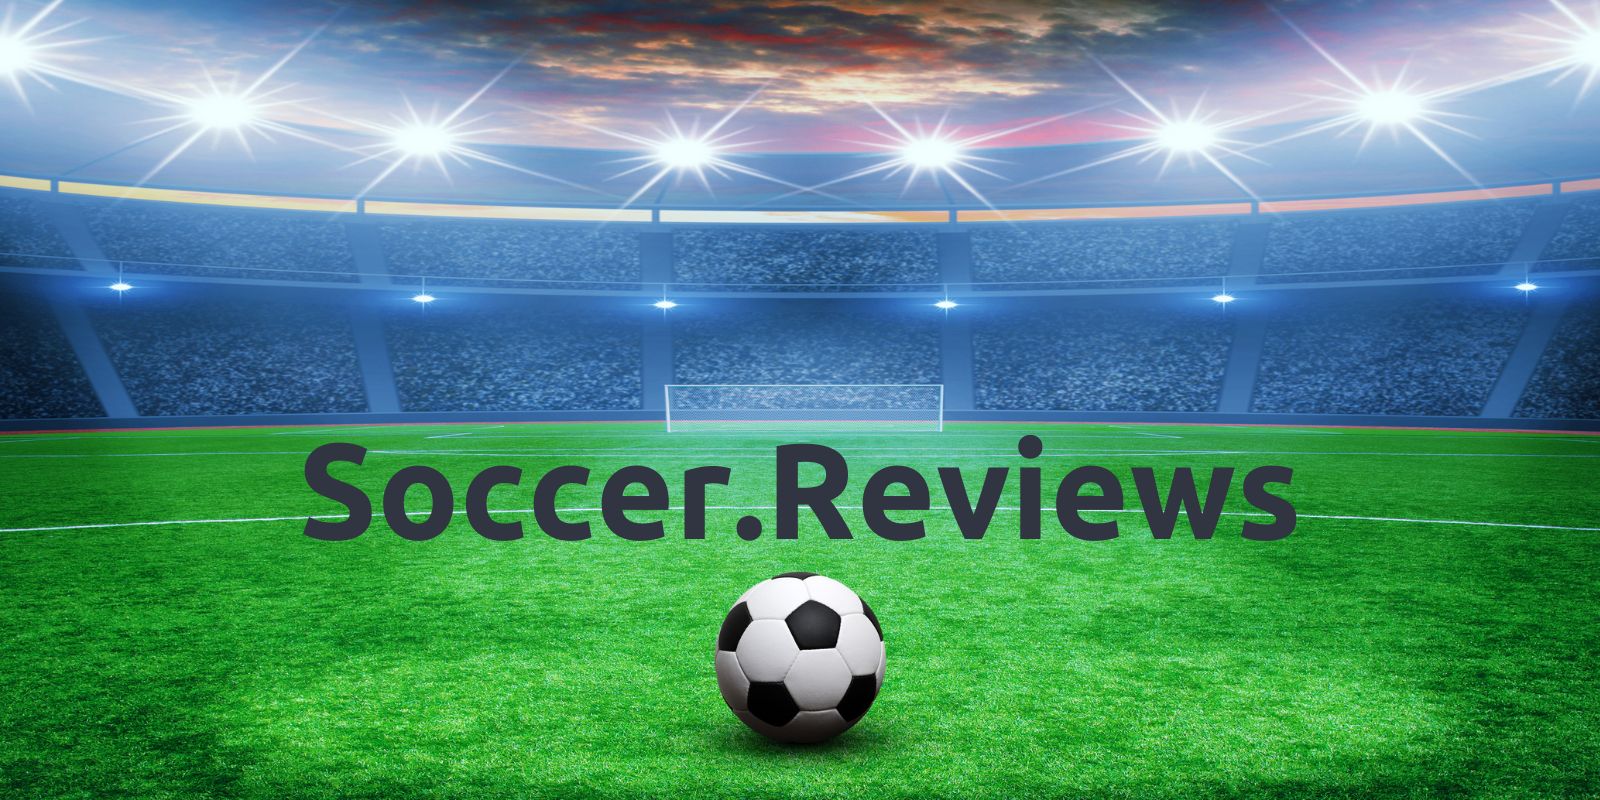 Soccer.Reviews